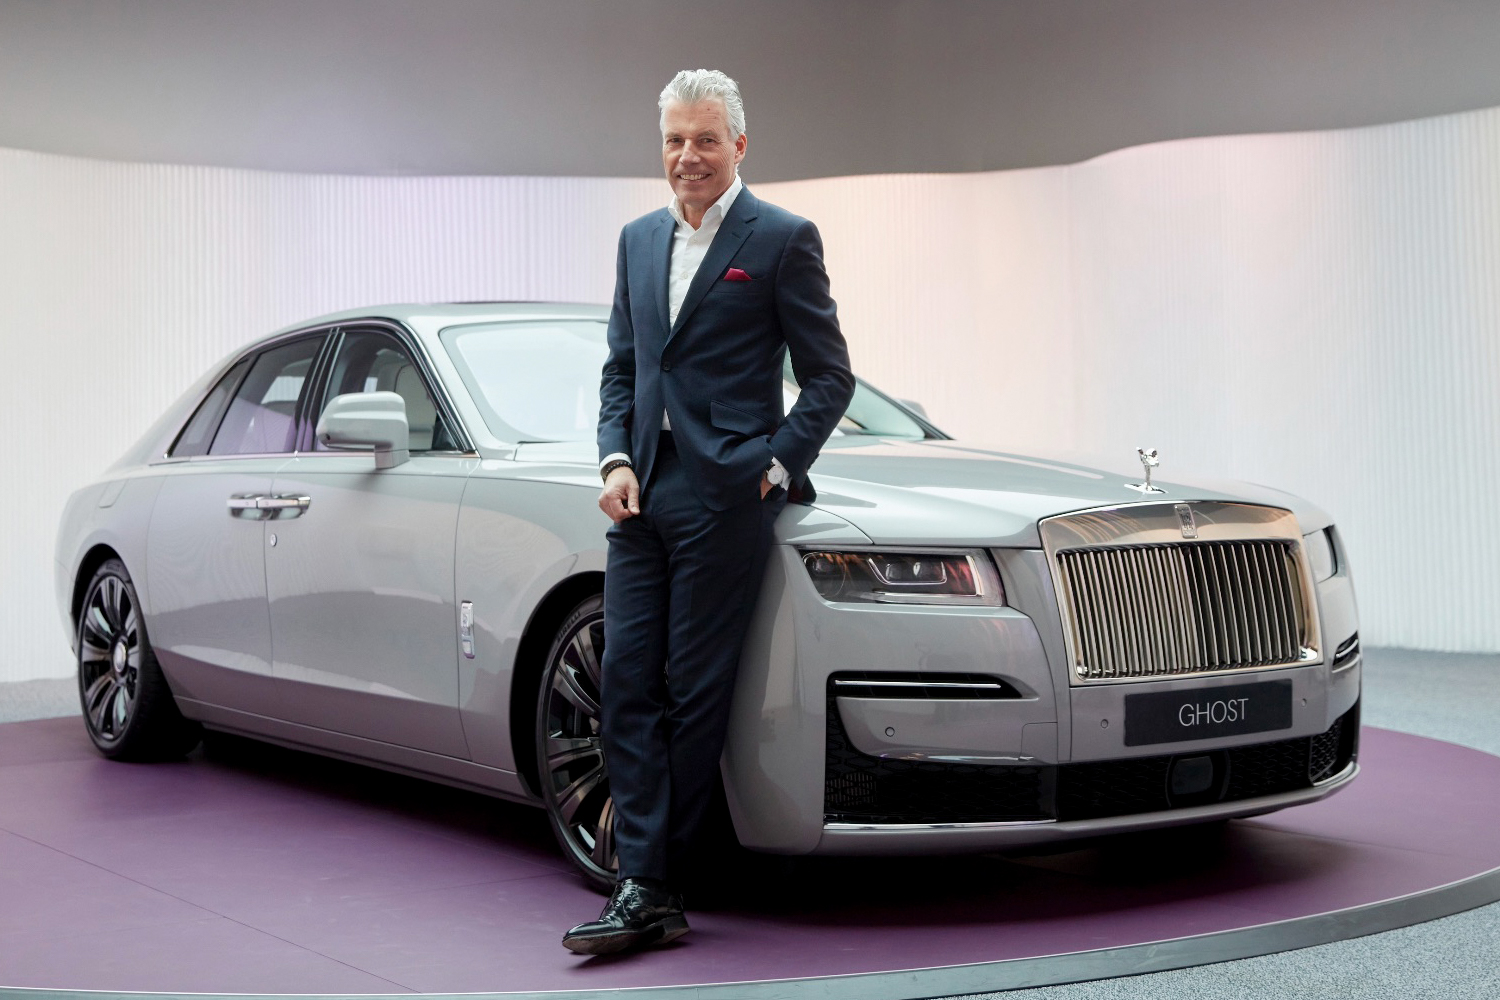 Rolls-Royce Motor Cars CEO Torsten Müller-Ötvös next to the Ghost car